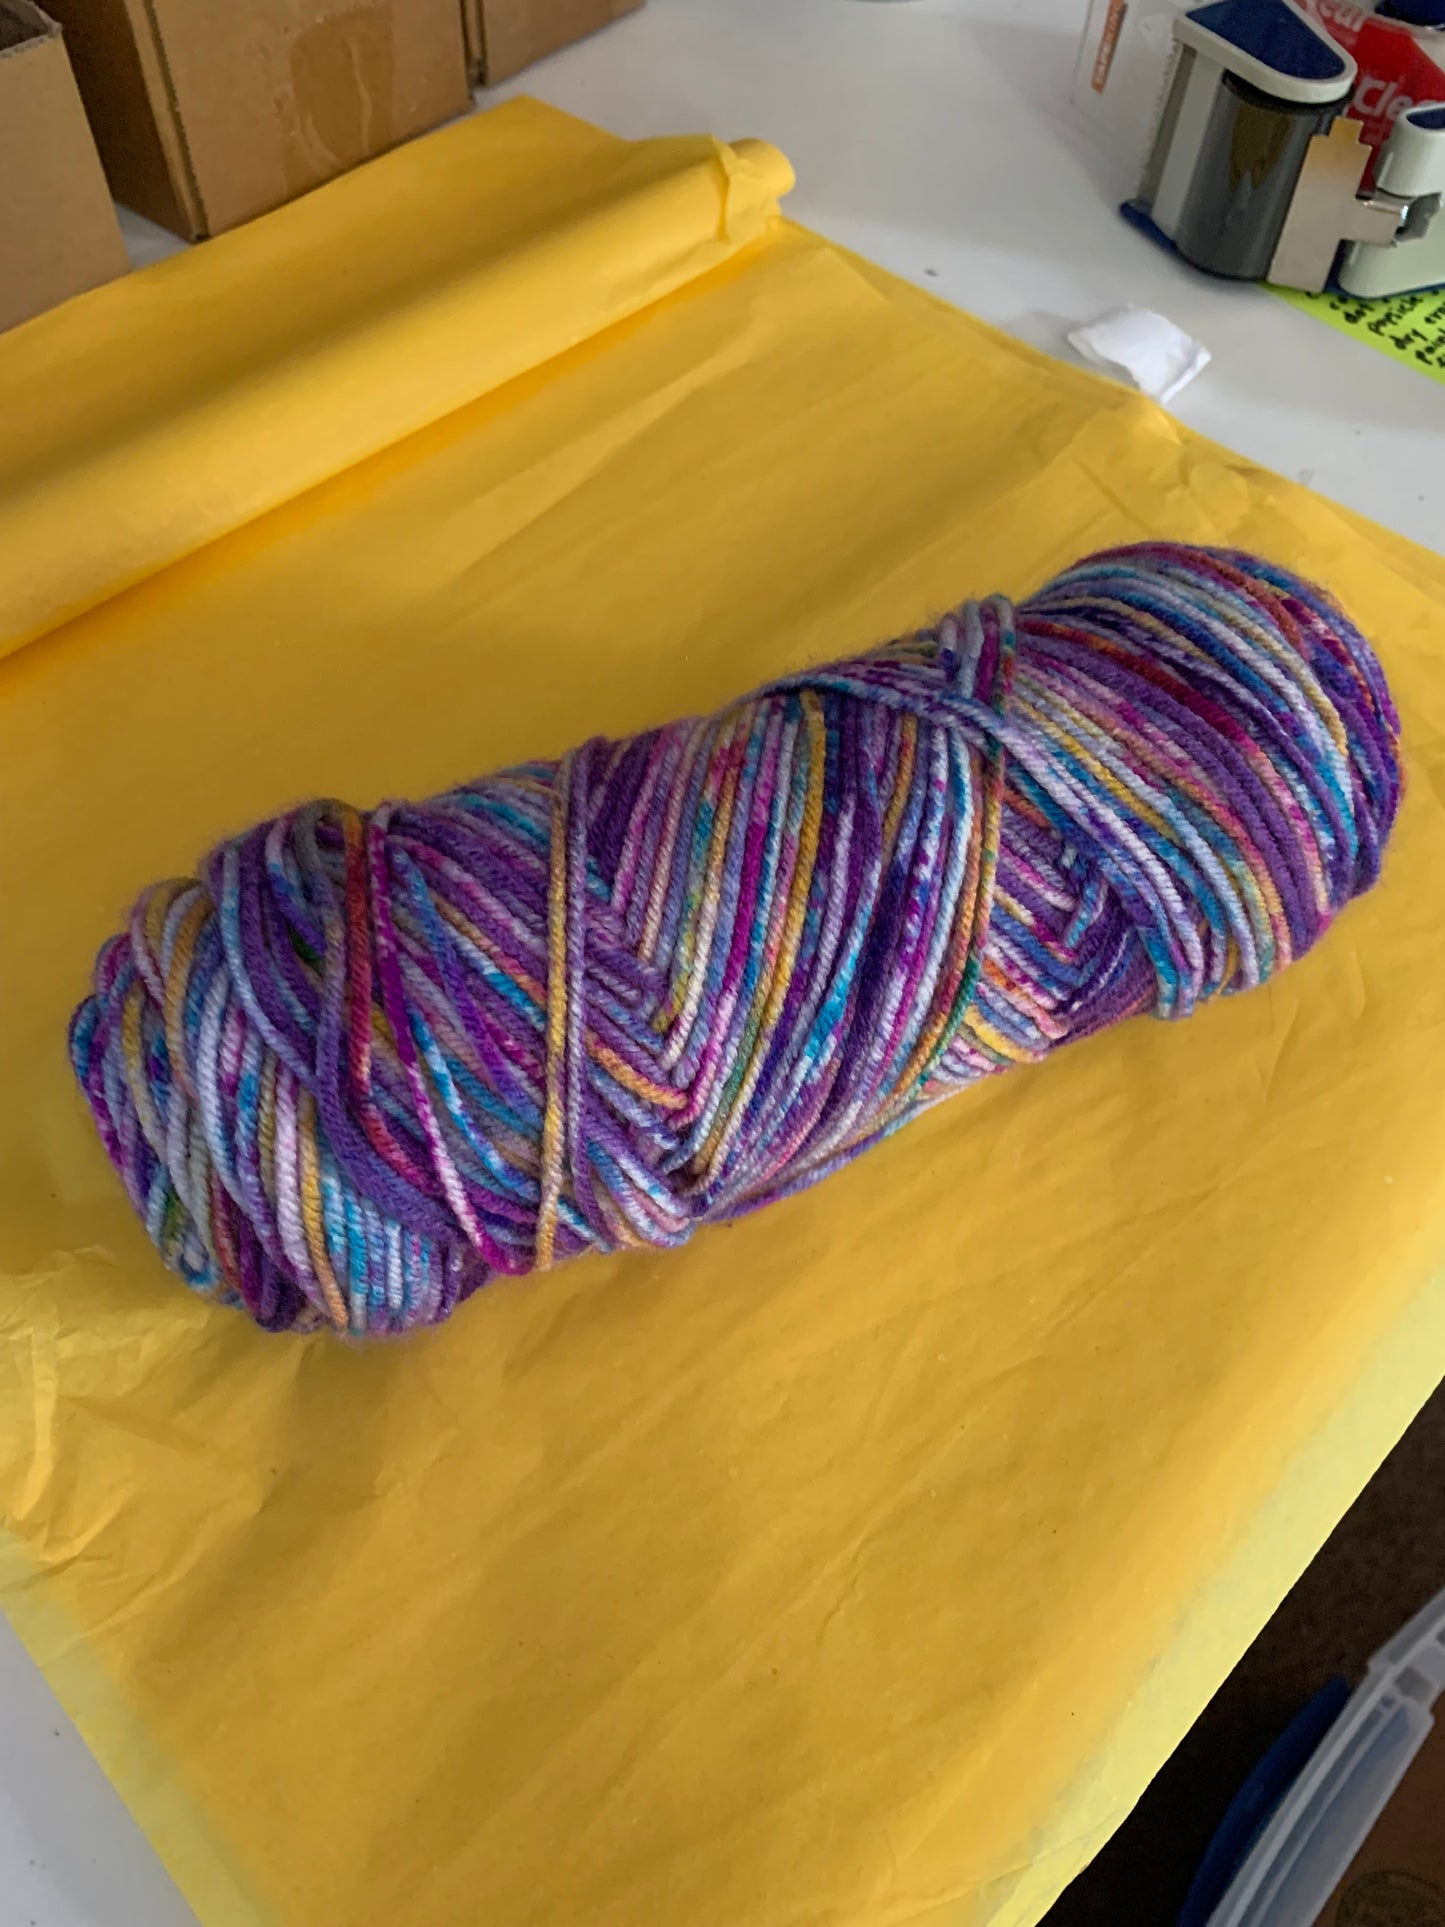 Multicolored Yarn